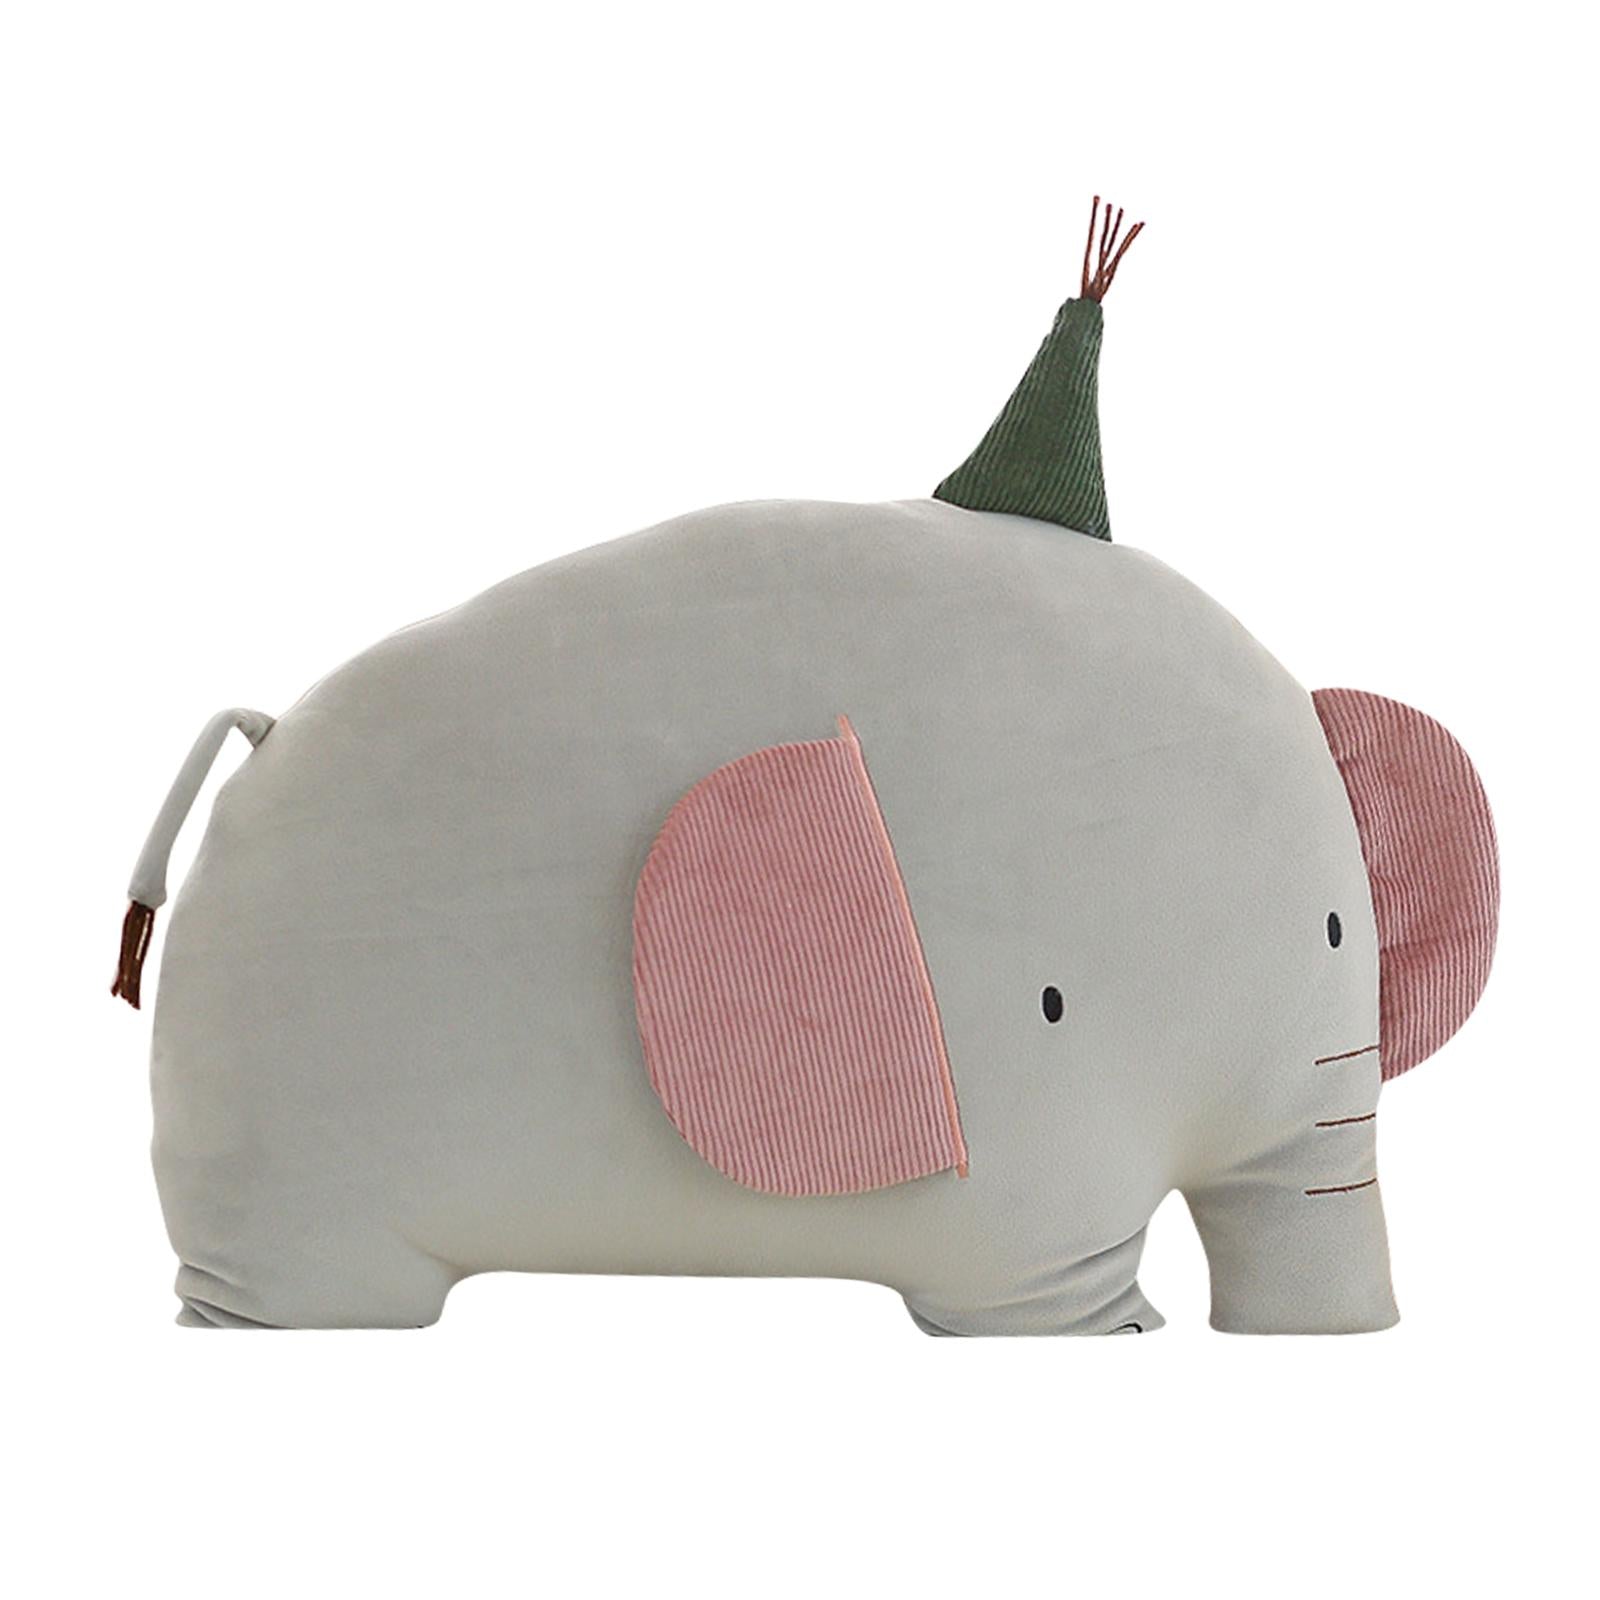 Animal Plush with Soft Fabric Stuffing for Girls Child Kid Kindergarten Gift Elephant